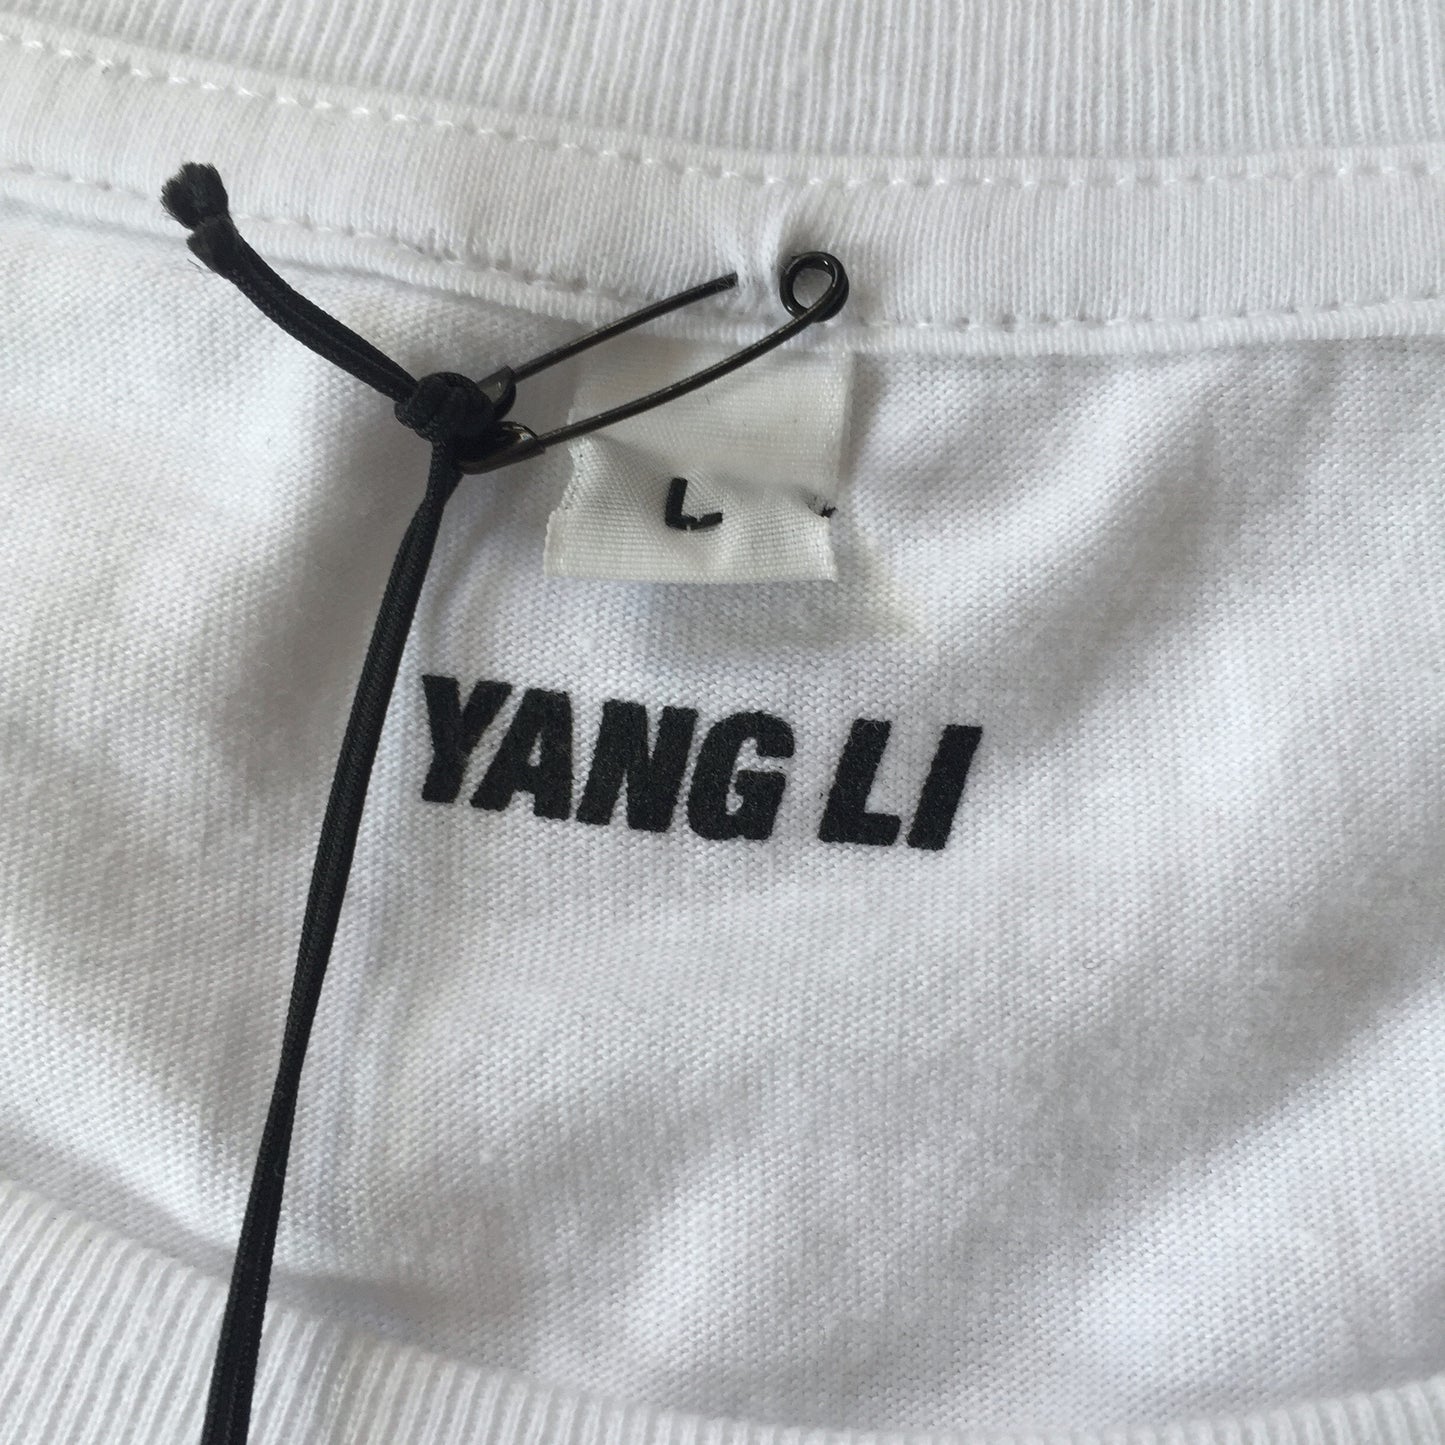 Yang Li - White DREAMER T-Shirt